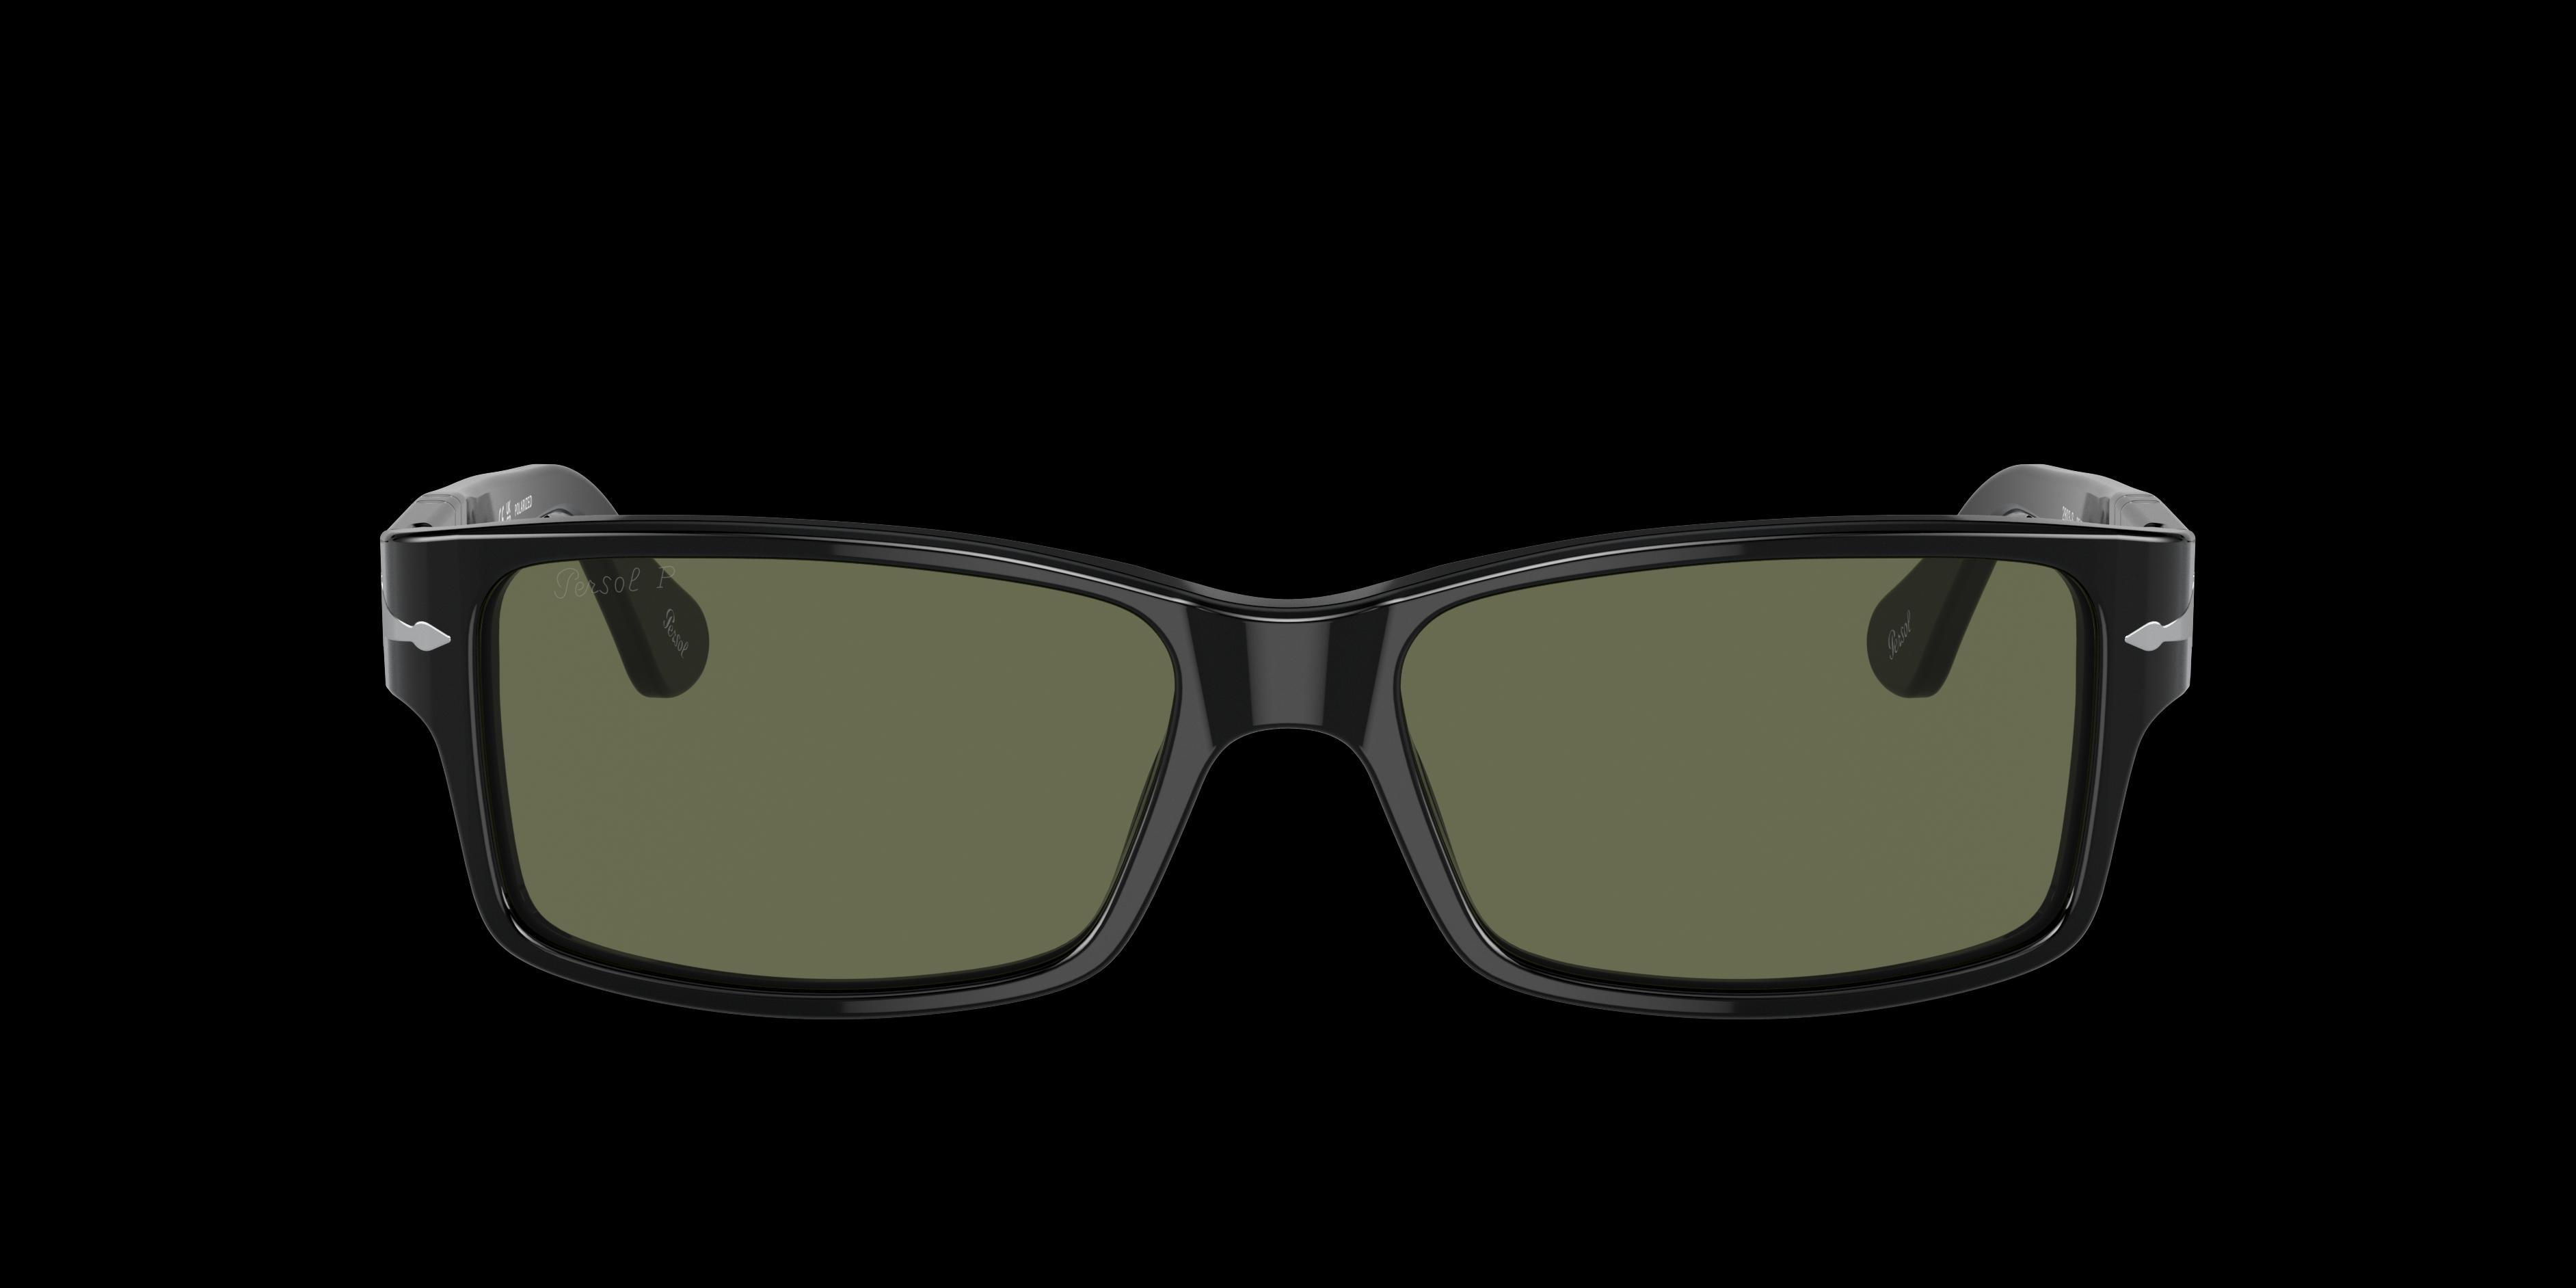 Persol 58mm Polarized Square Sunglasses Product Image